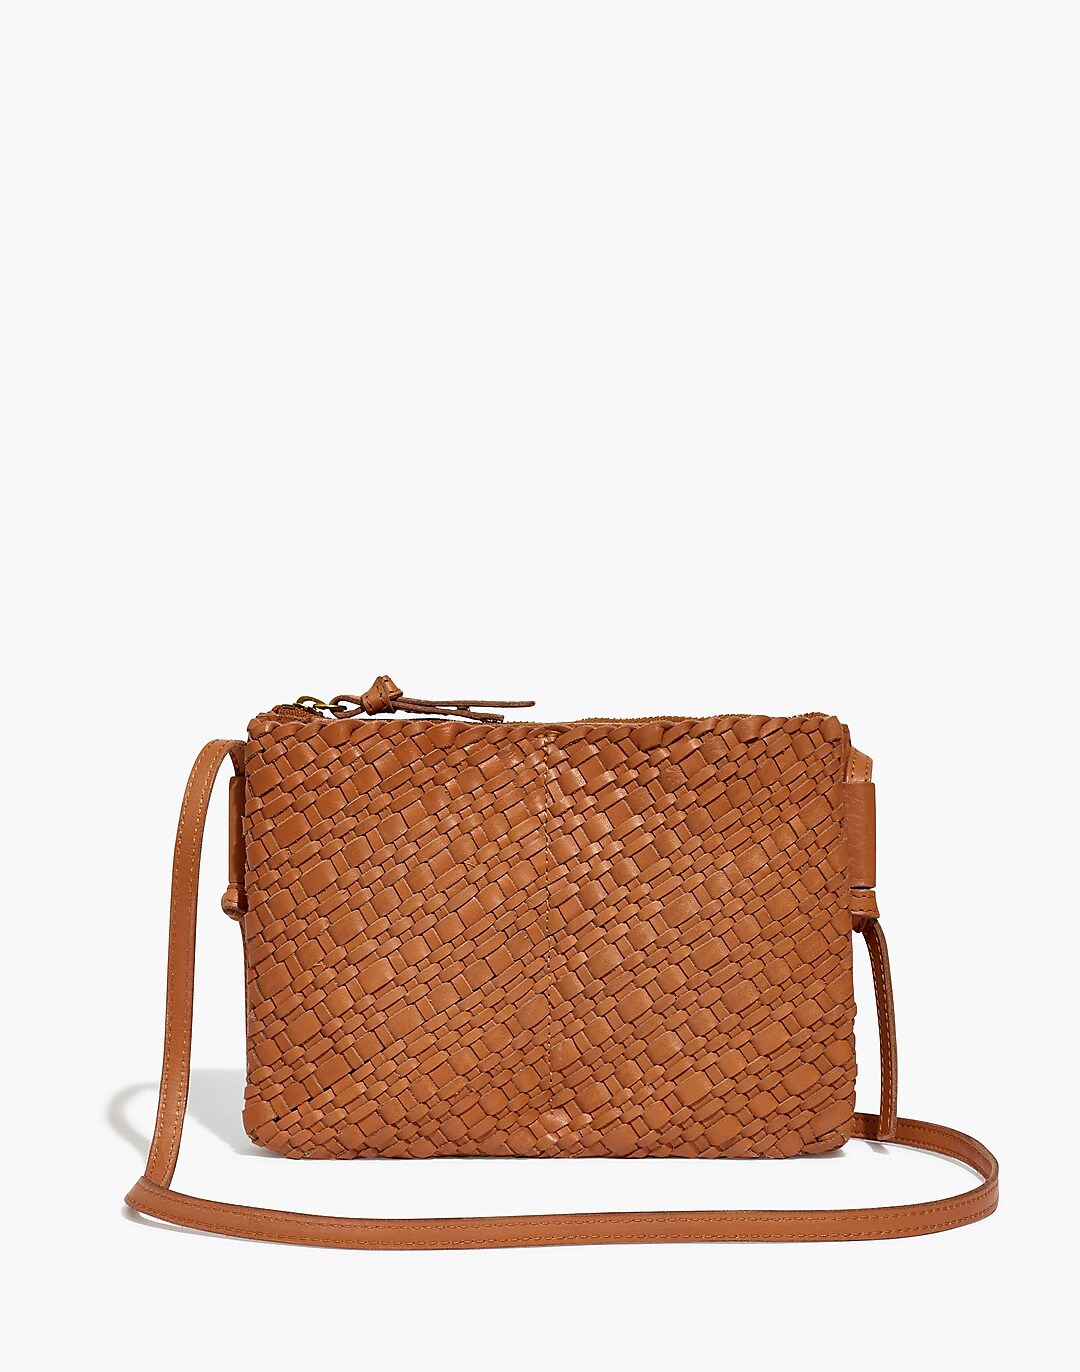 Mint Woven Leather Crossbody Bag